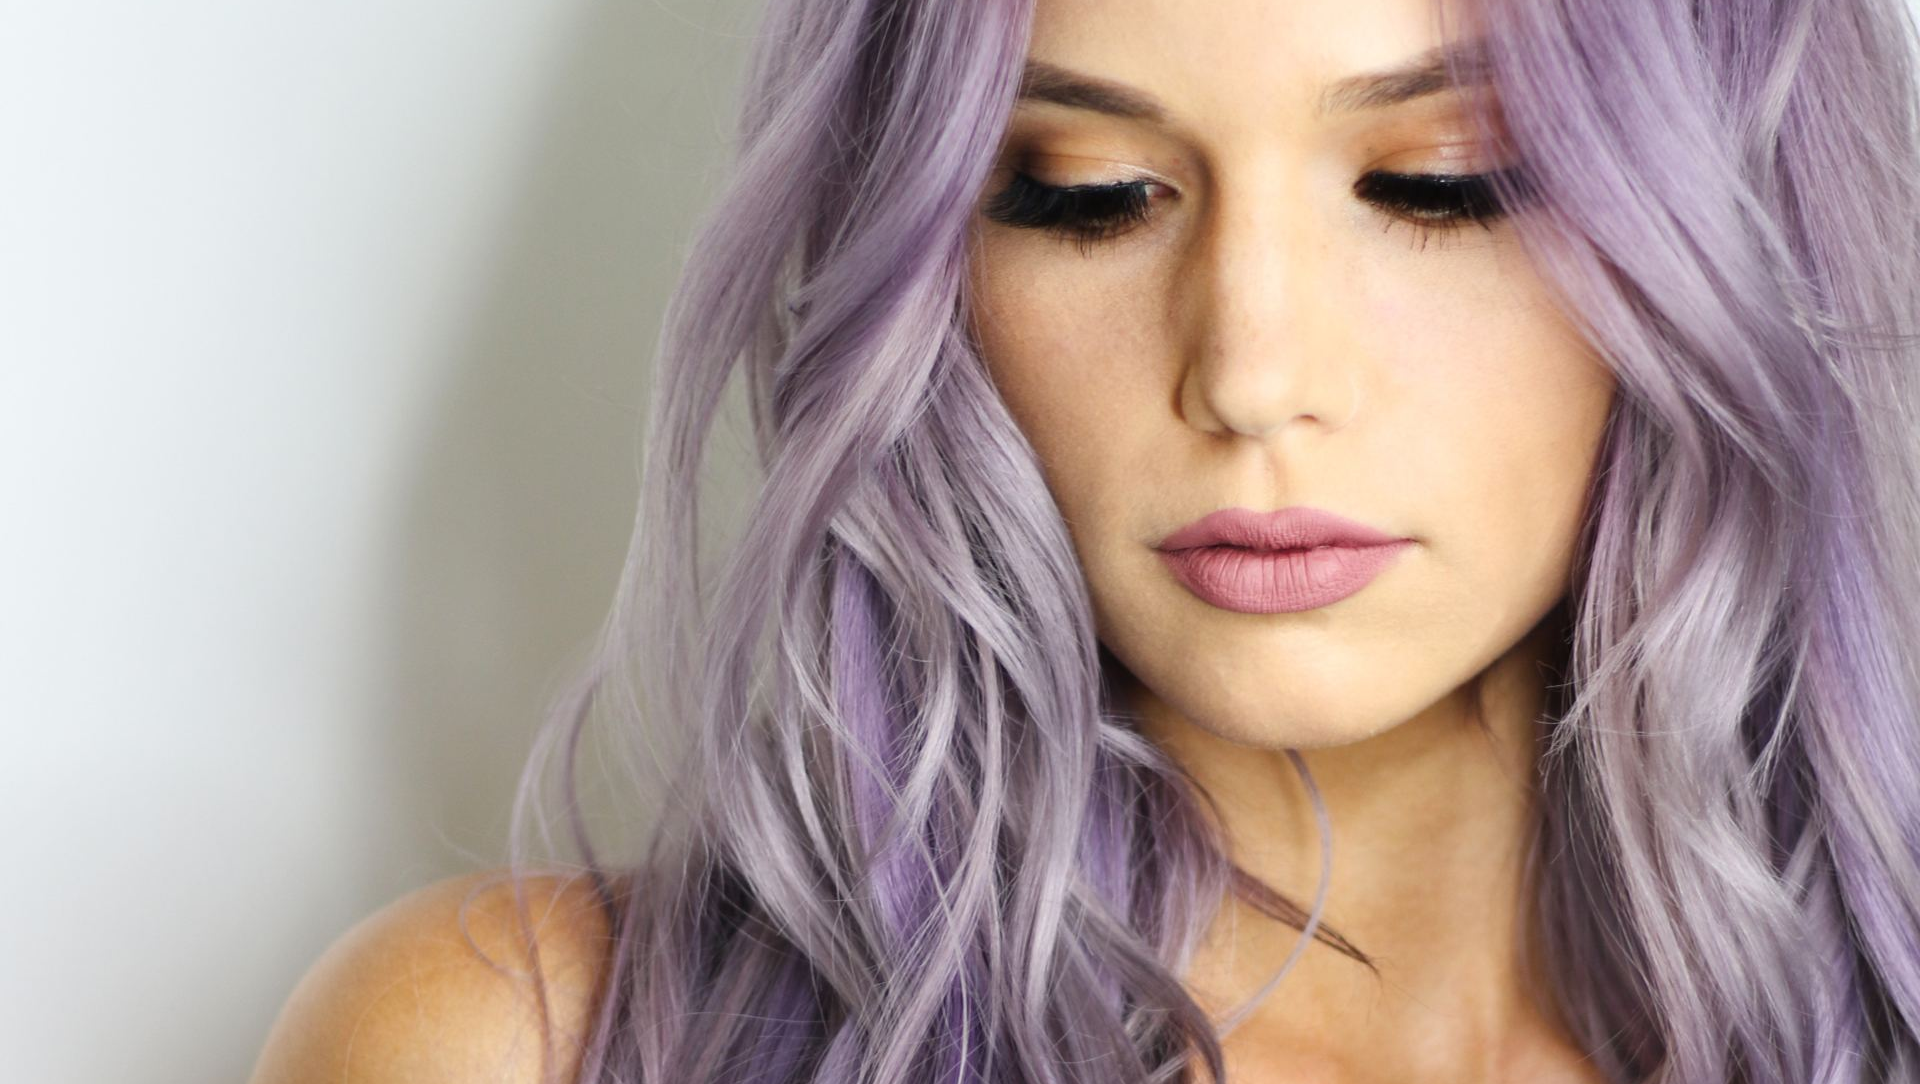 Woman with purple hair